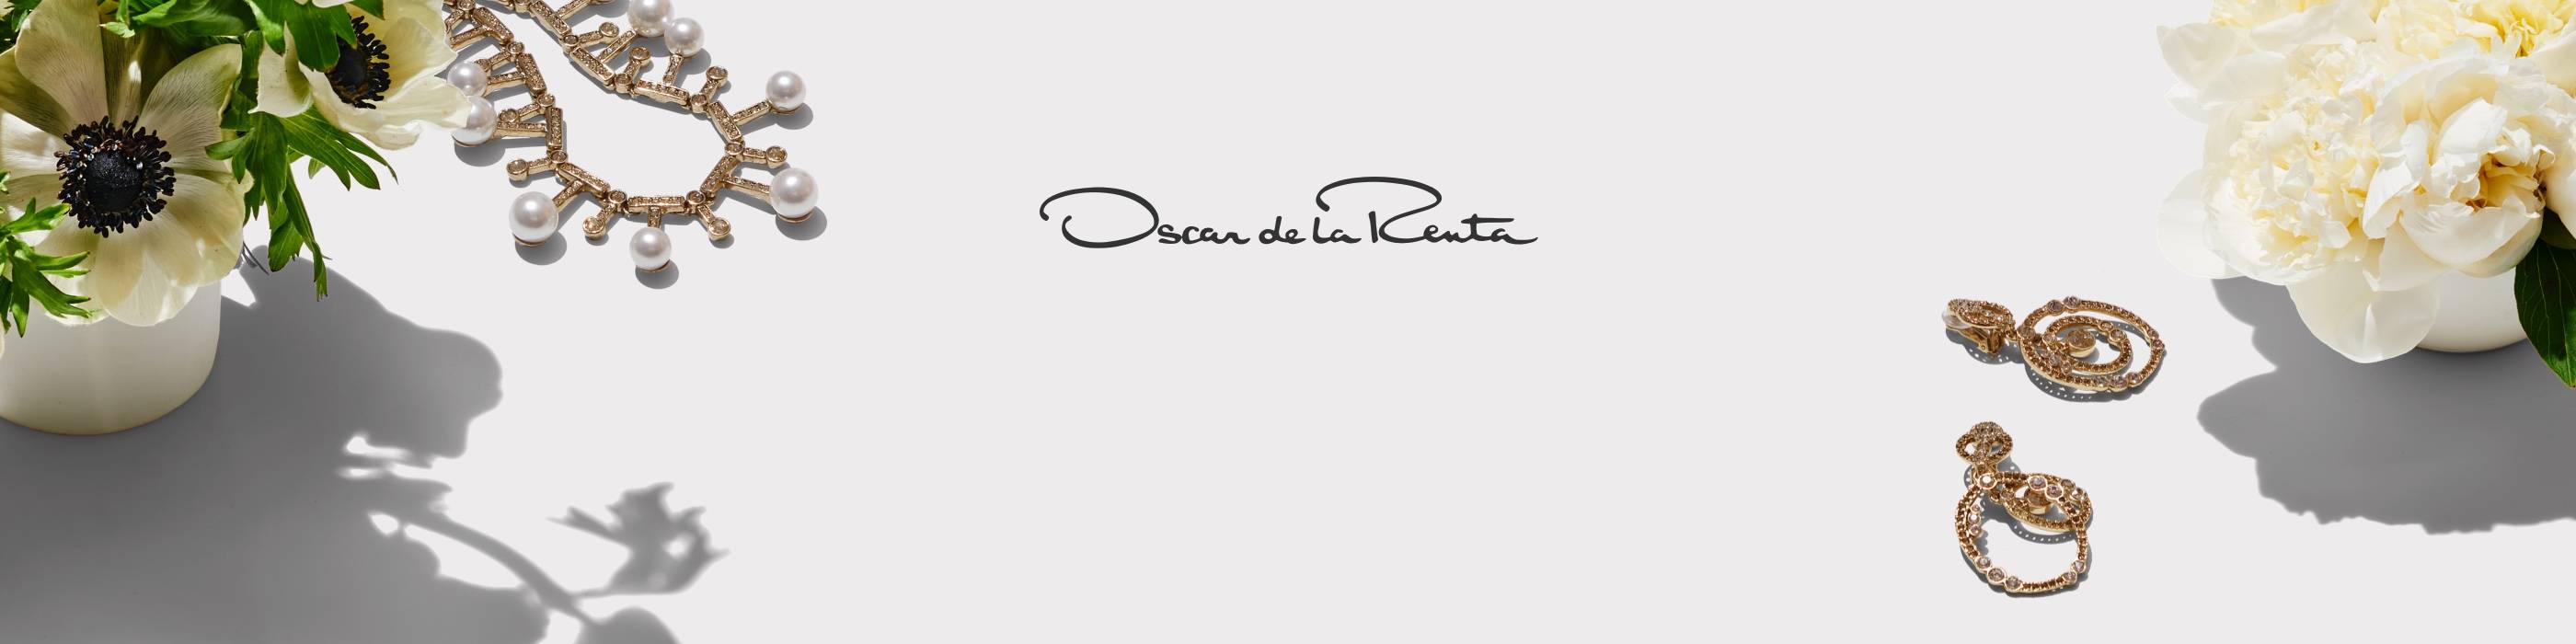 Oscar De La Renta Logo - Oscar de la Renta invitations and save the dates - online at ...